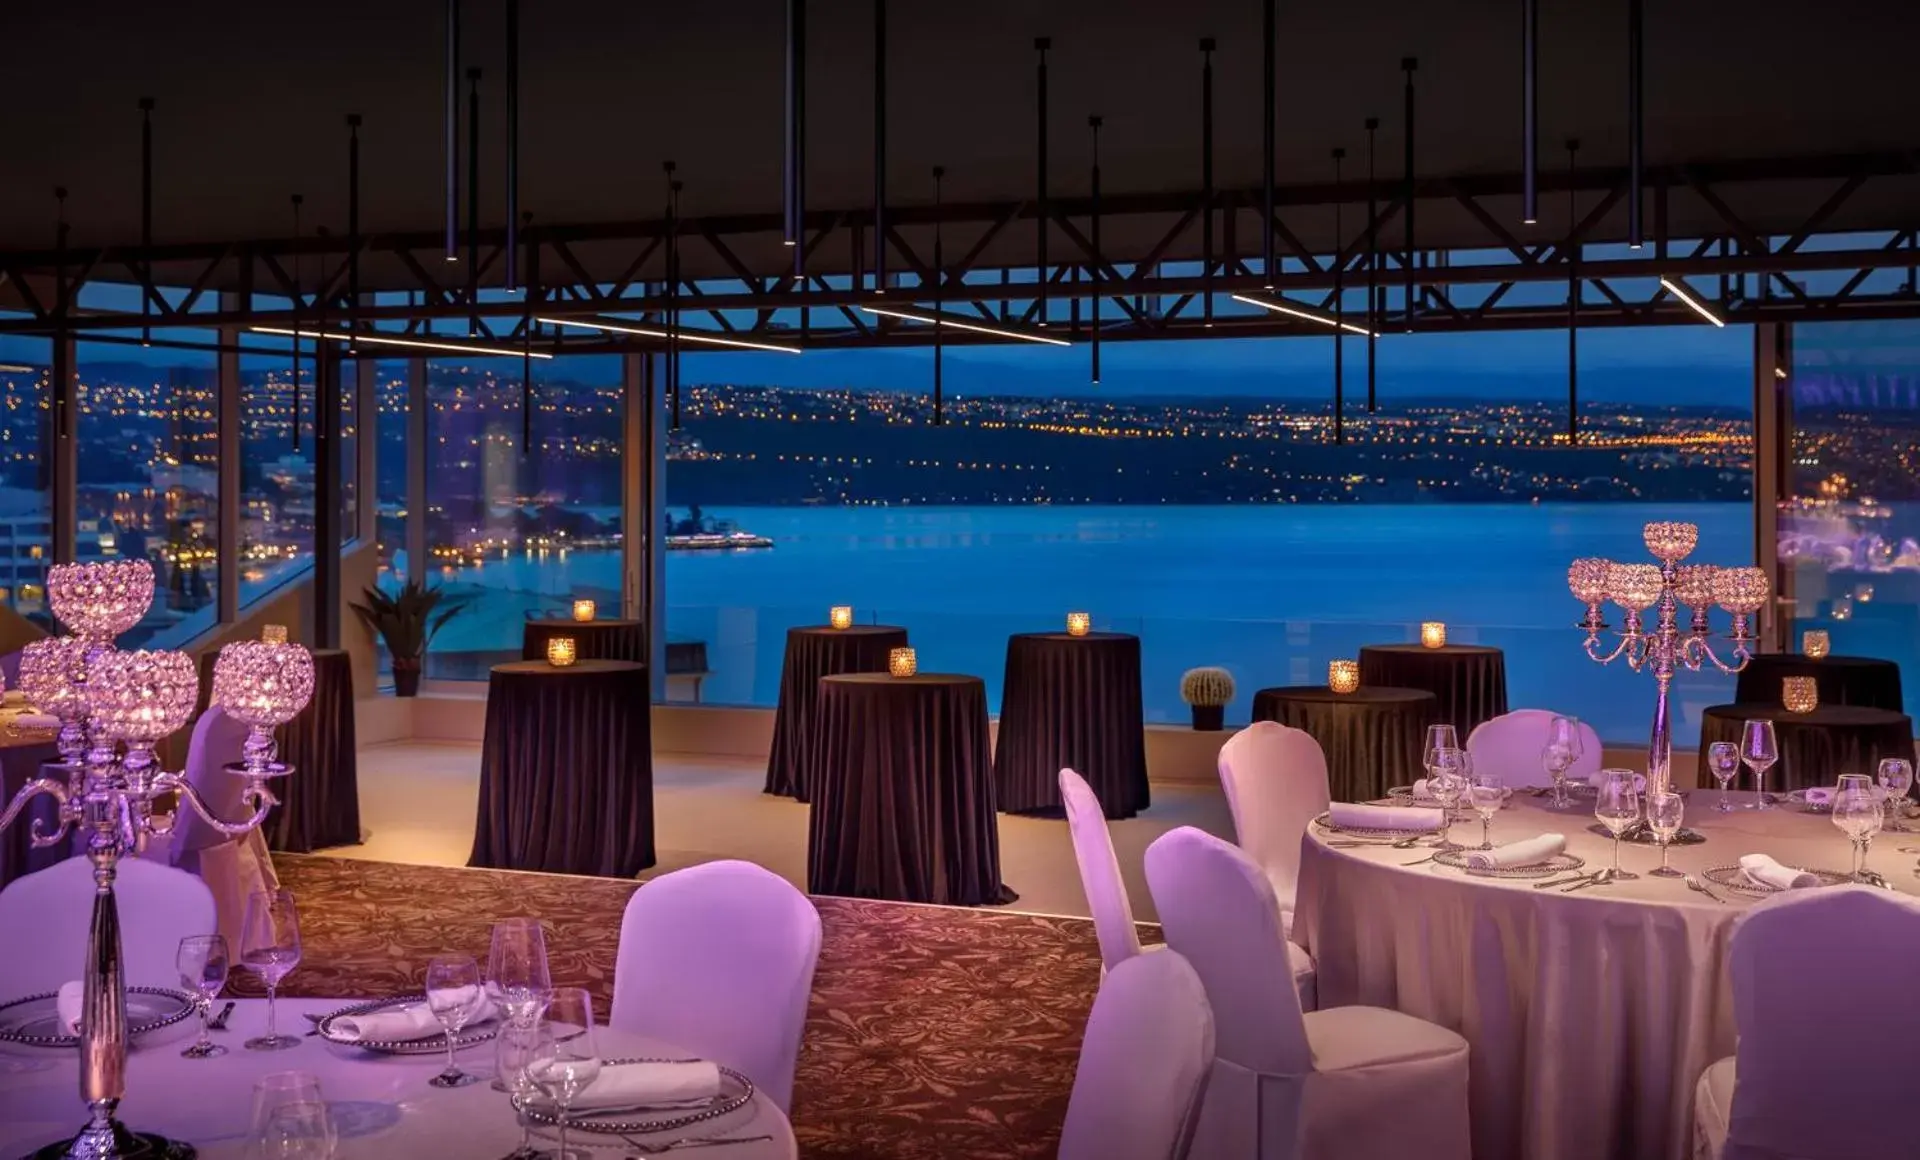 Banquet/Function facilities, Banquet Facilities in Grand Hotel Adriatic II